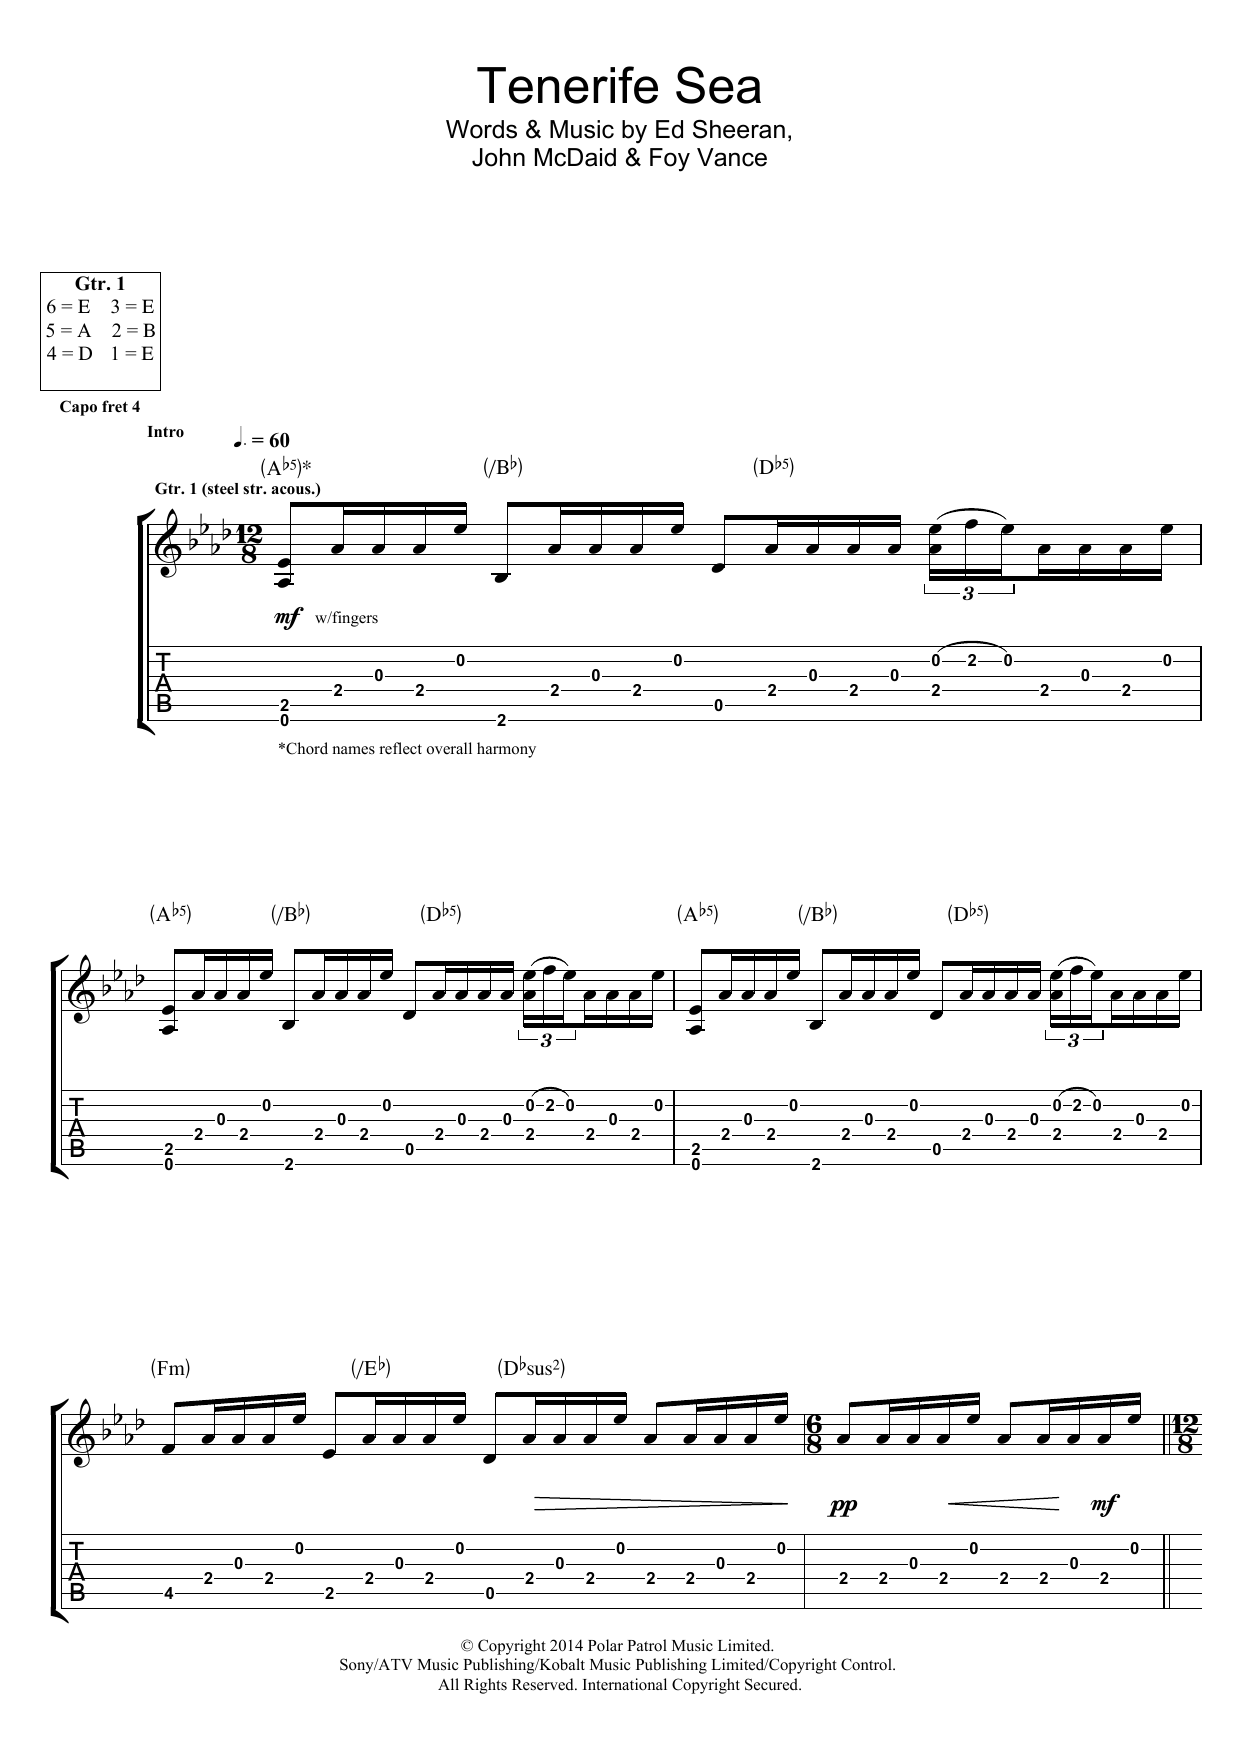 Download Ed Sheeran Tenerife Sea Sheet Music and learn how to play Lyrics & Chords PDF digital score in minutes